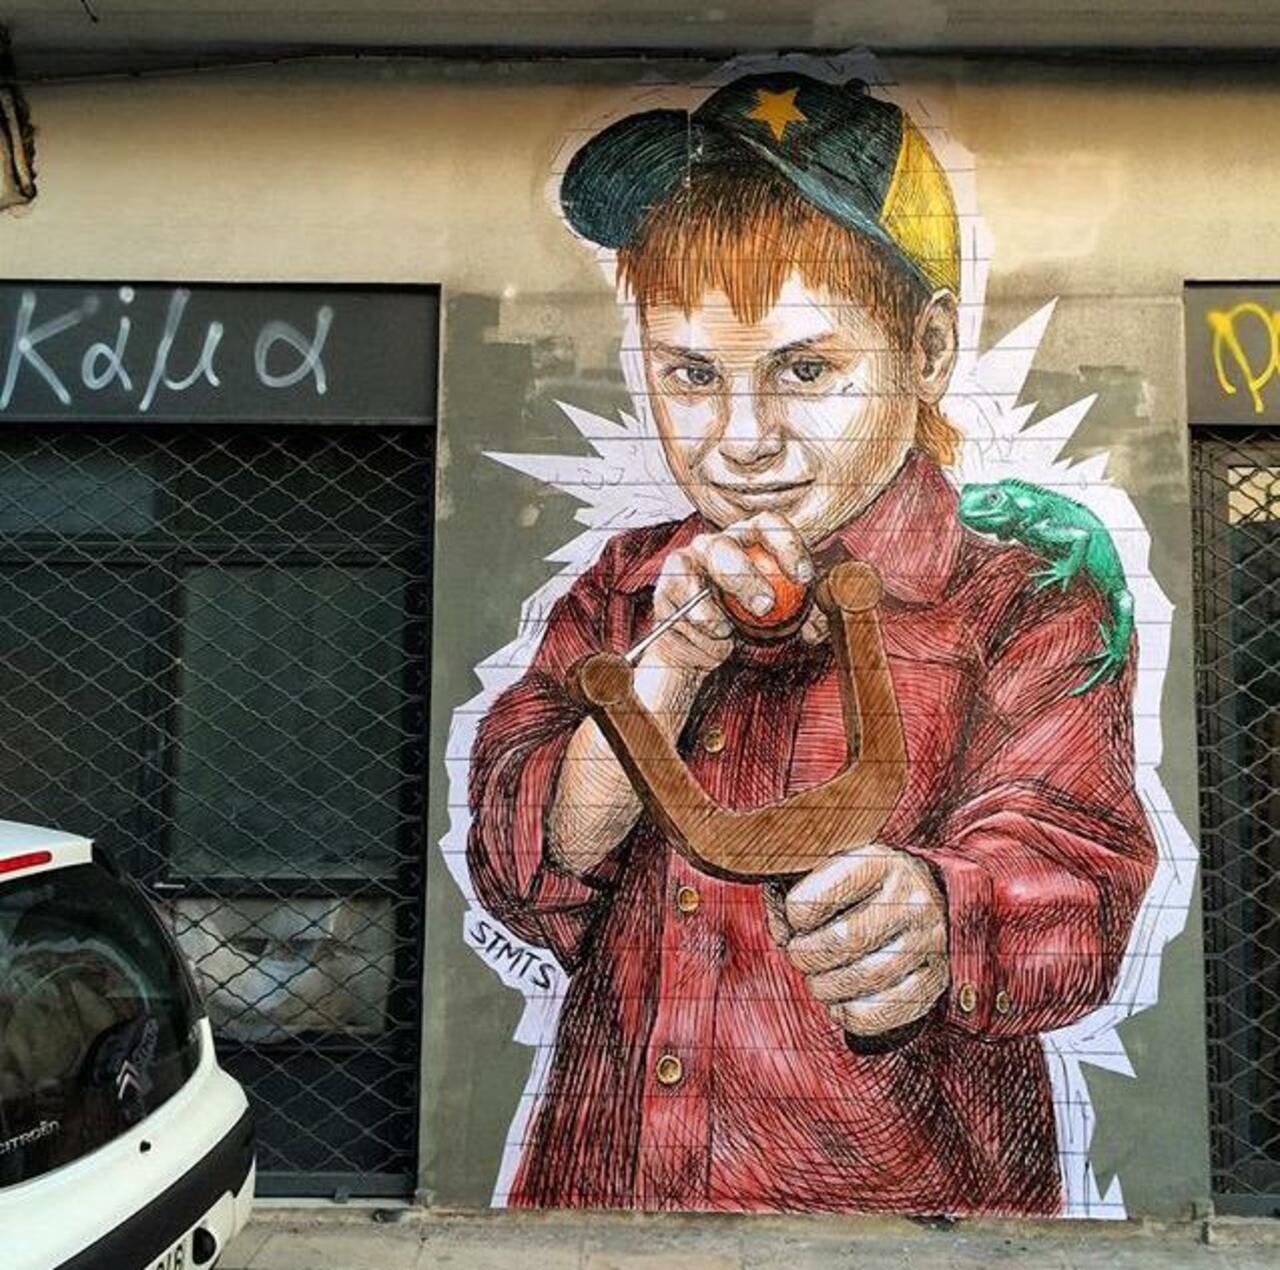 Street Art by STMTS in Athens

#art #graffiti #mural #streetart http://t.co/9tDtc9HsV6